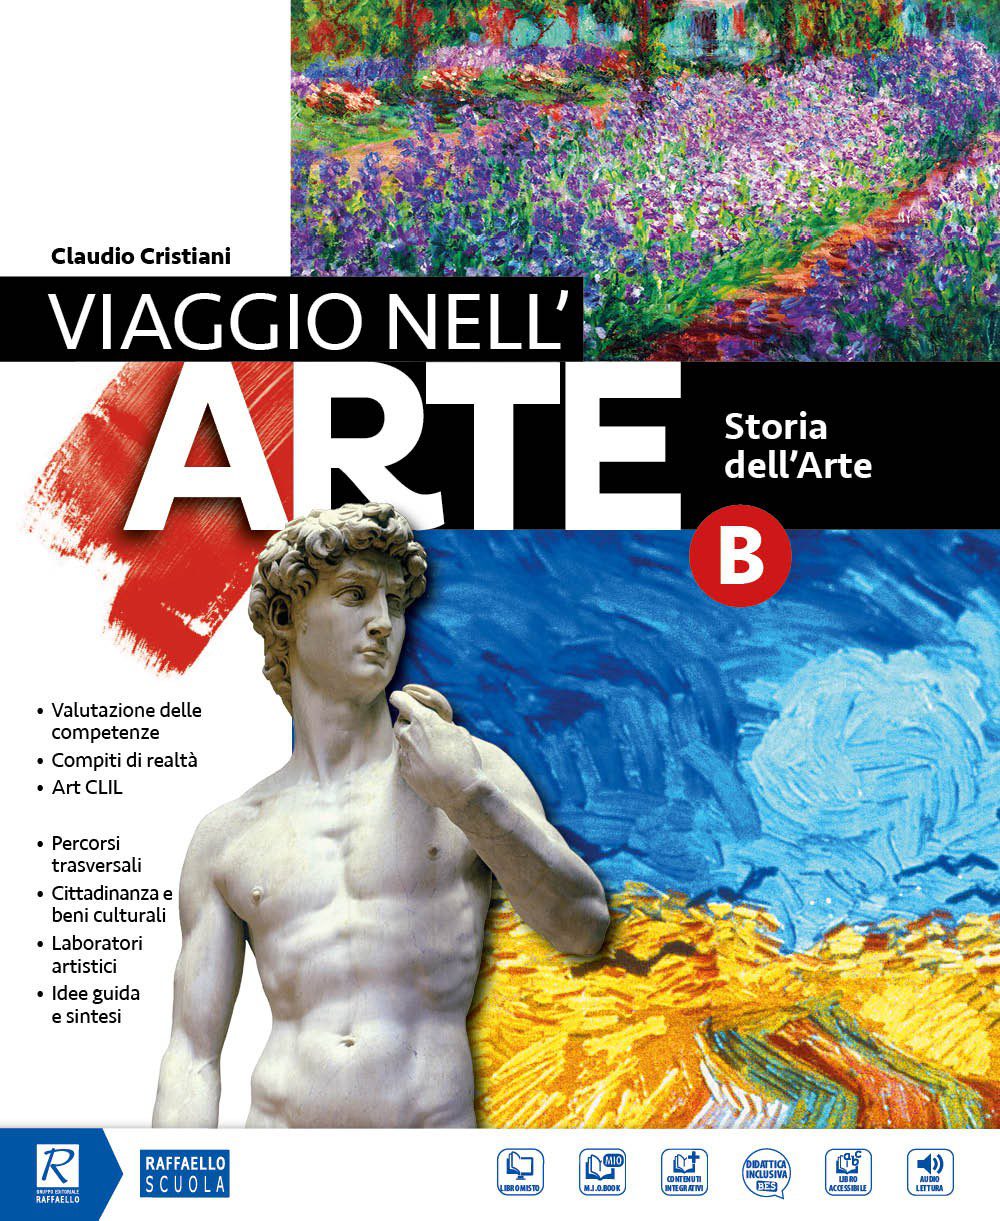 https://raffaellobookshop.it/wp-content/uploads/2021/06/2587-Viaggio-nellArte-Volume-B-DVD-Libro-digitale.jpg